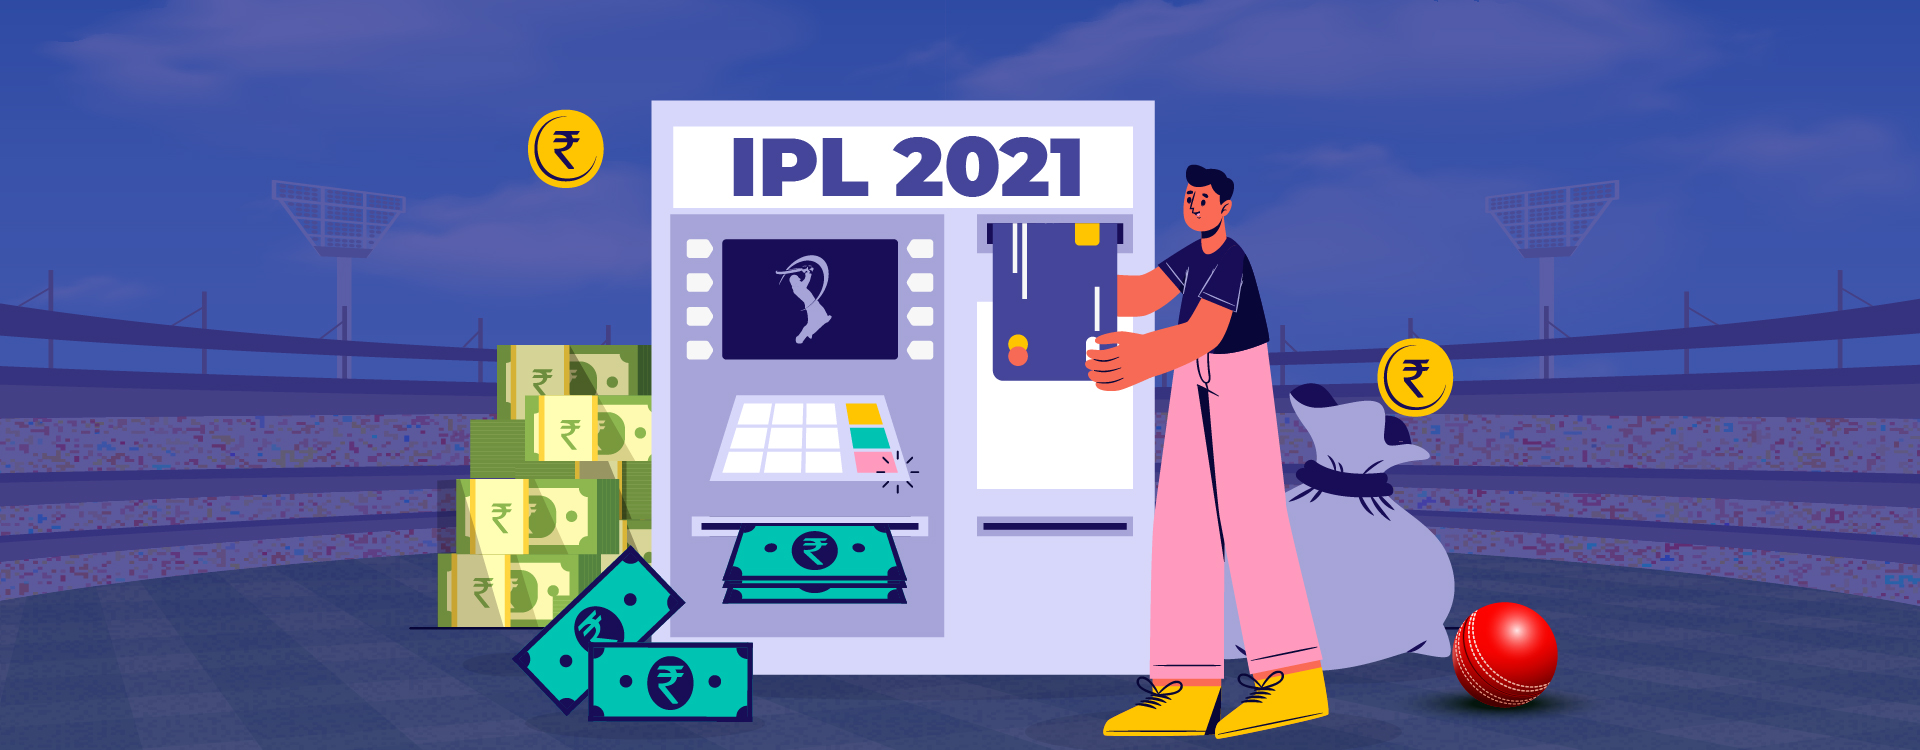 Analysing Viewership Revenue of IPL: How will 2021 fare?